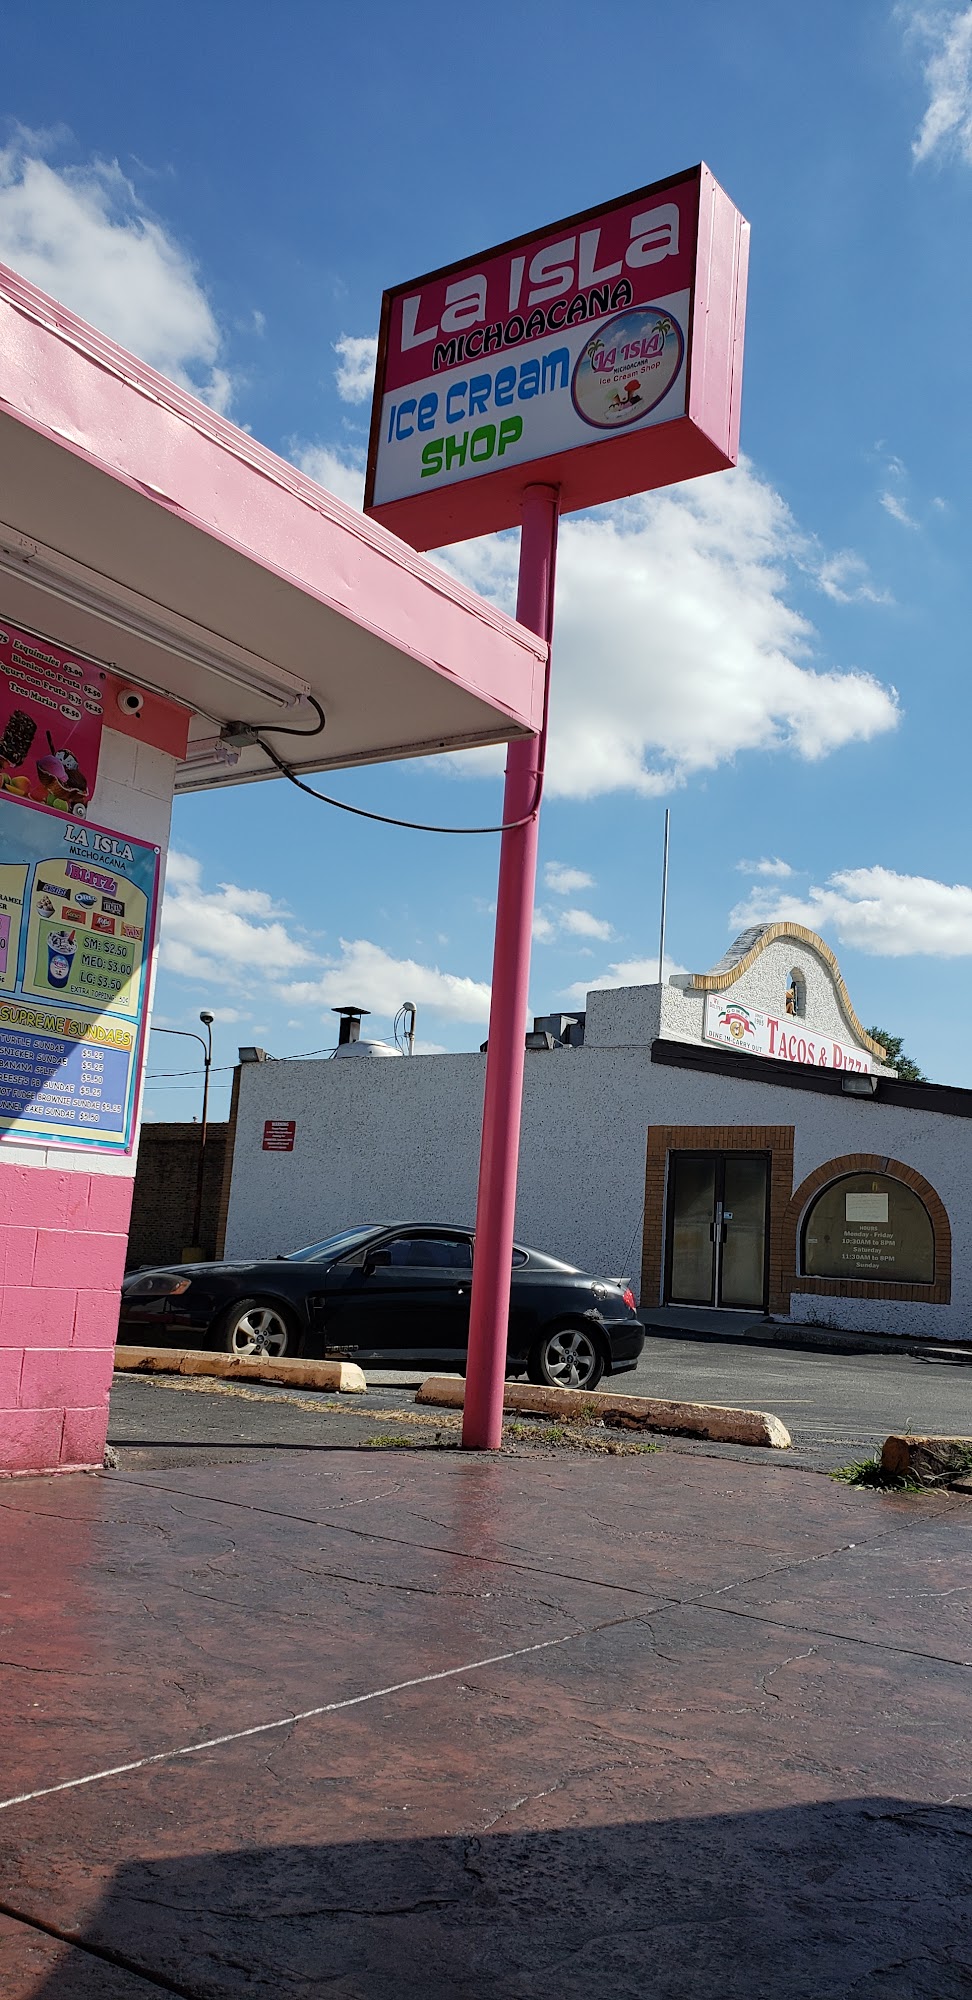 La Isla Michoacana Ice Cream Shop